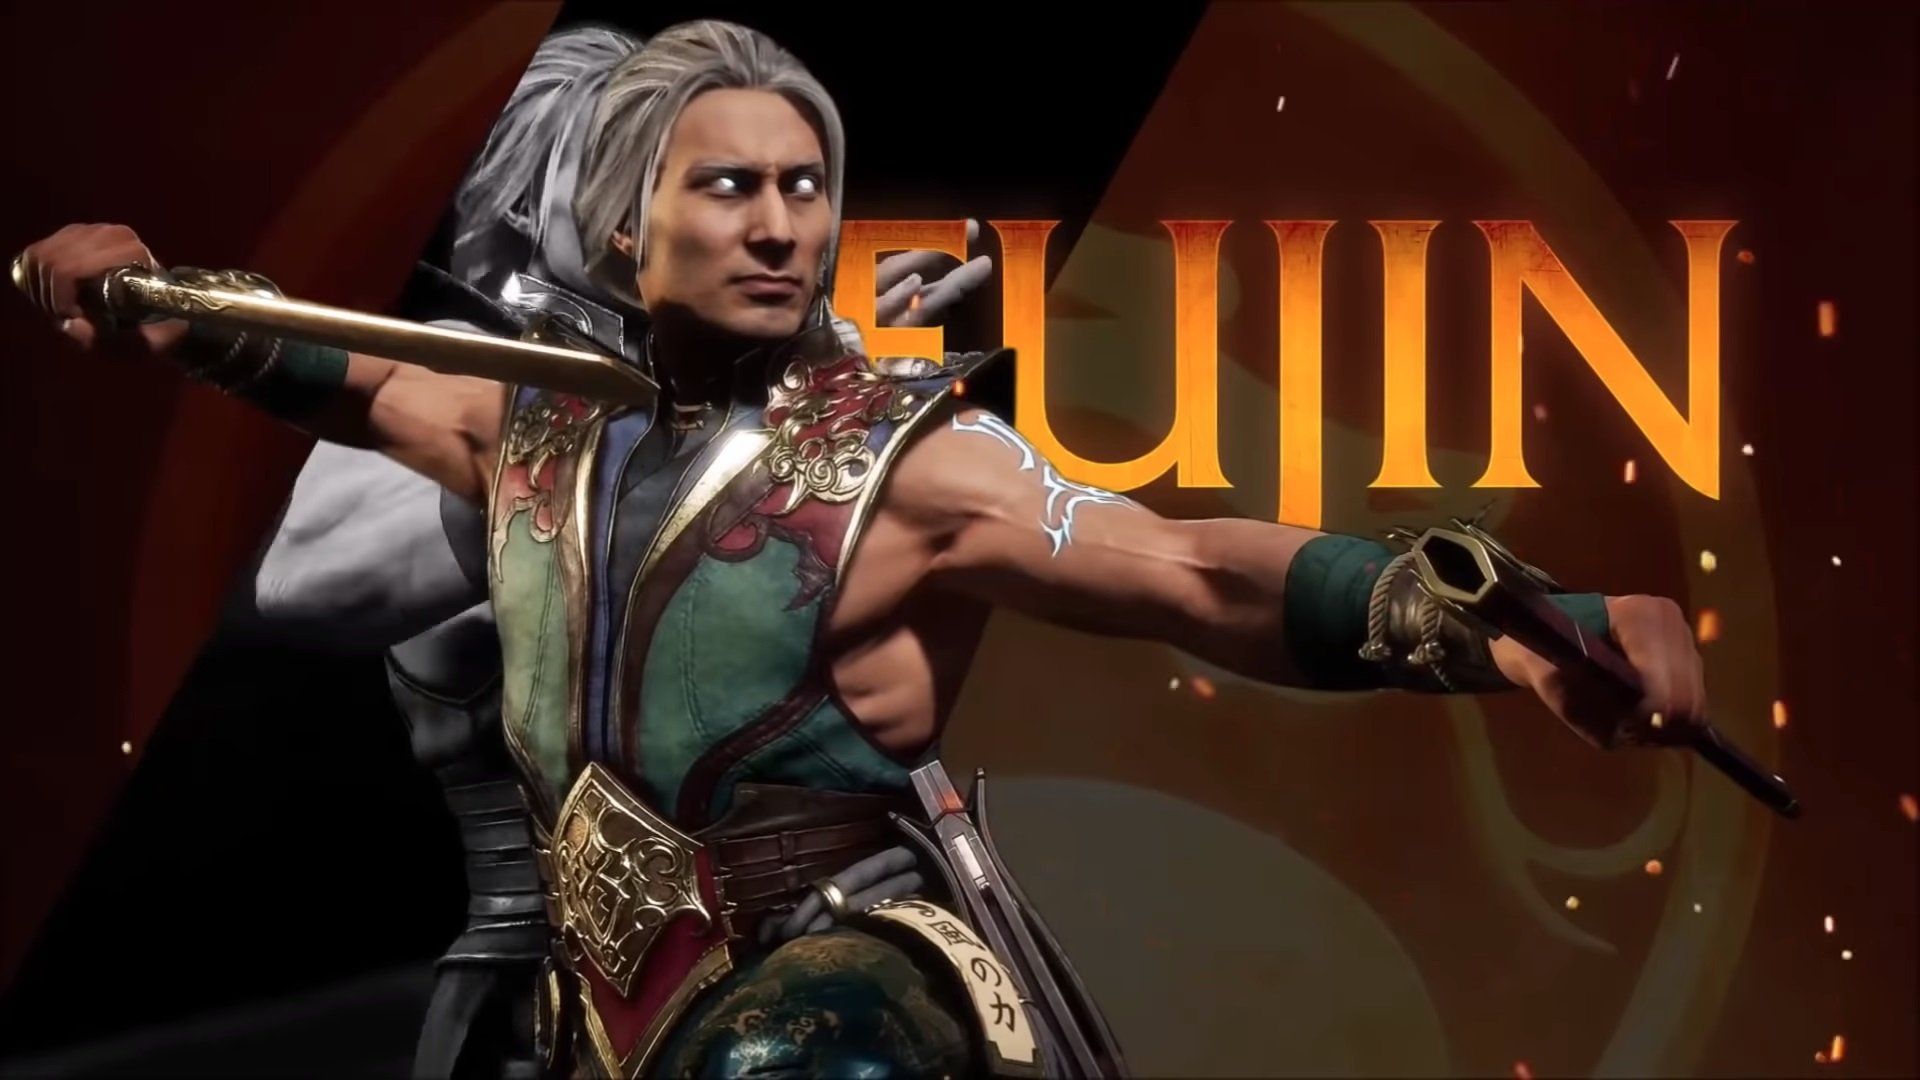 Fujin gets a gusty Mortal Kombat 11 intro trailer